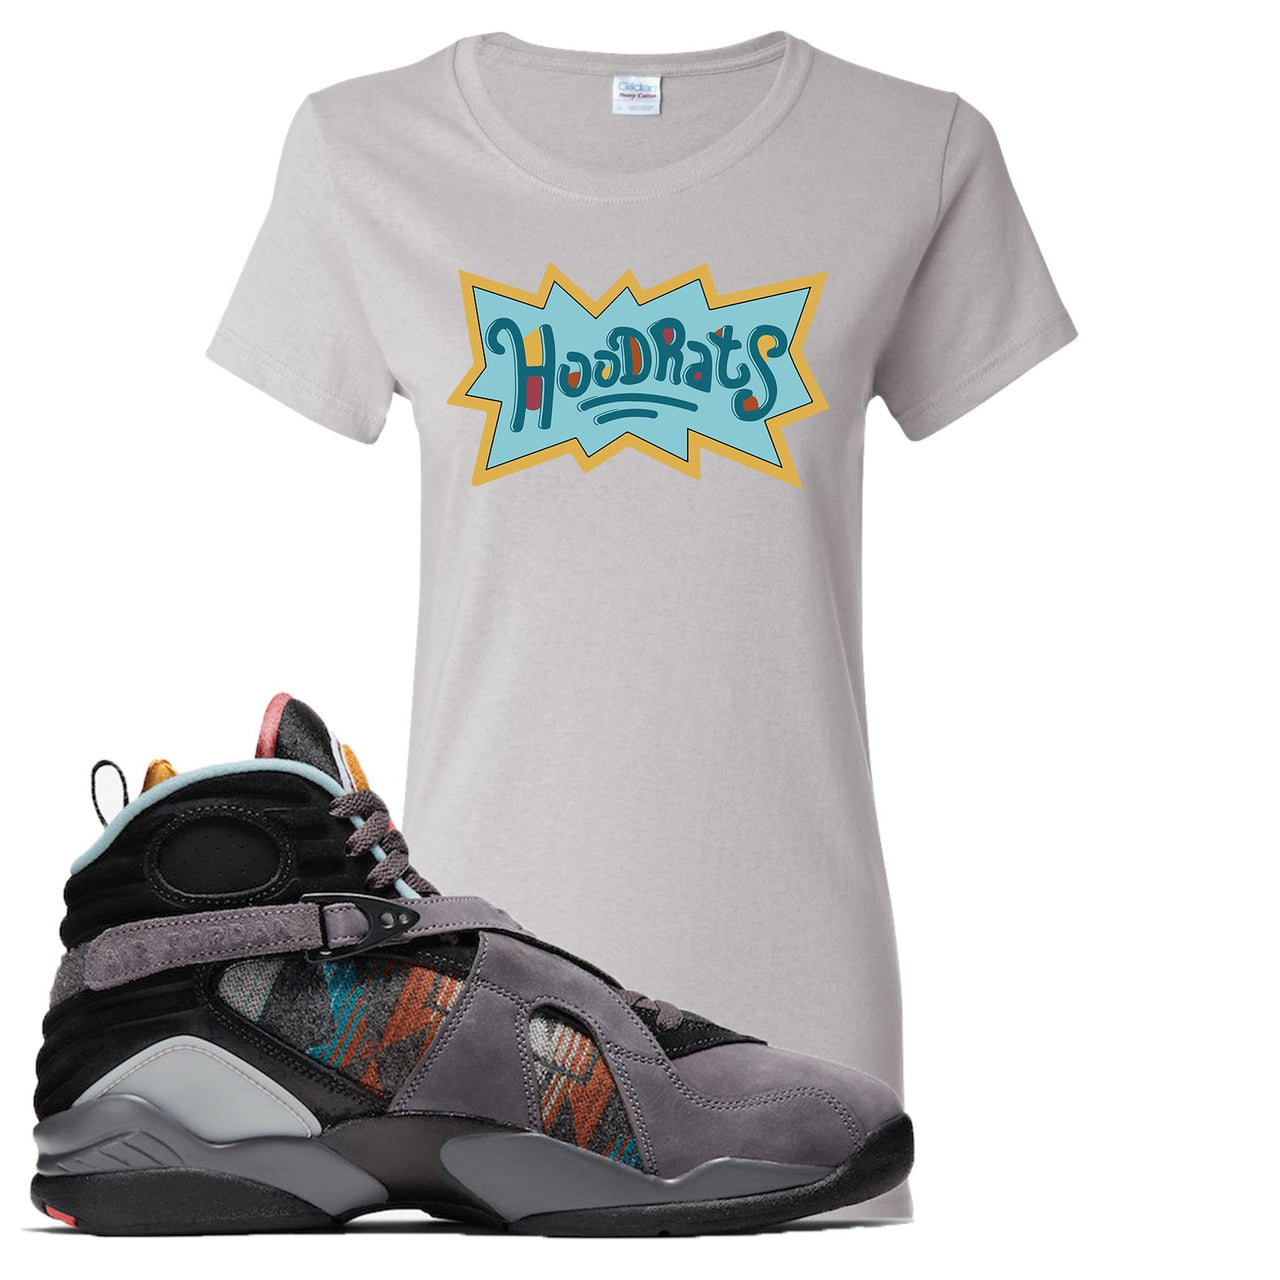 Jordan 8 N7 Pendleton Hood Rats Ice Gray Sneaker Hook Up Women's T-Shirt